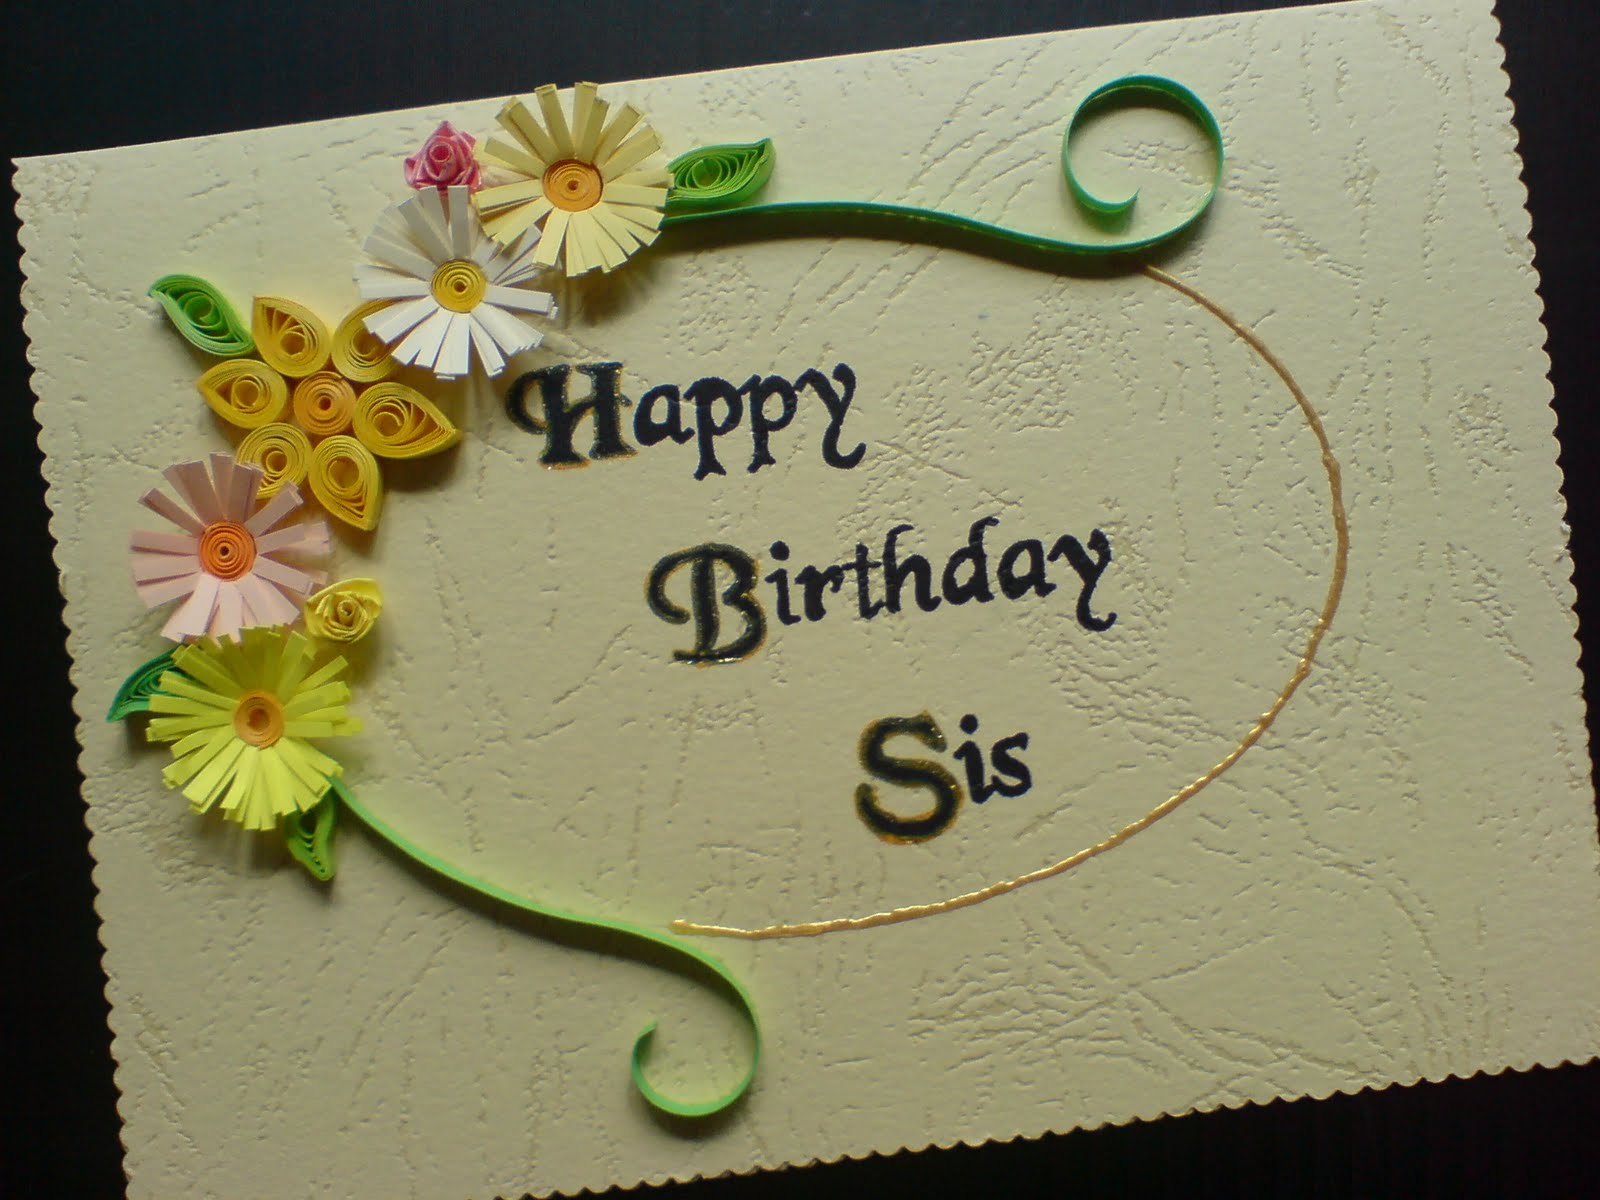 happy birthday sister wallpaper,text,cake decorating,cake,birthday cake,torte